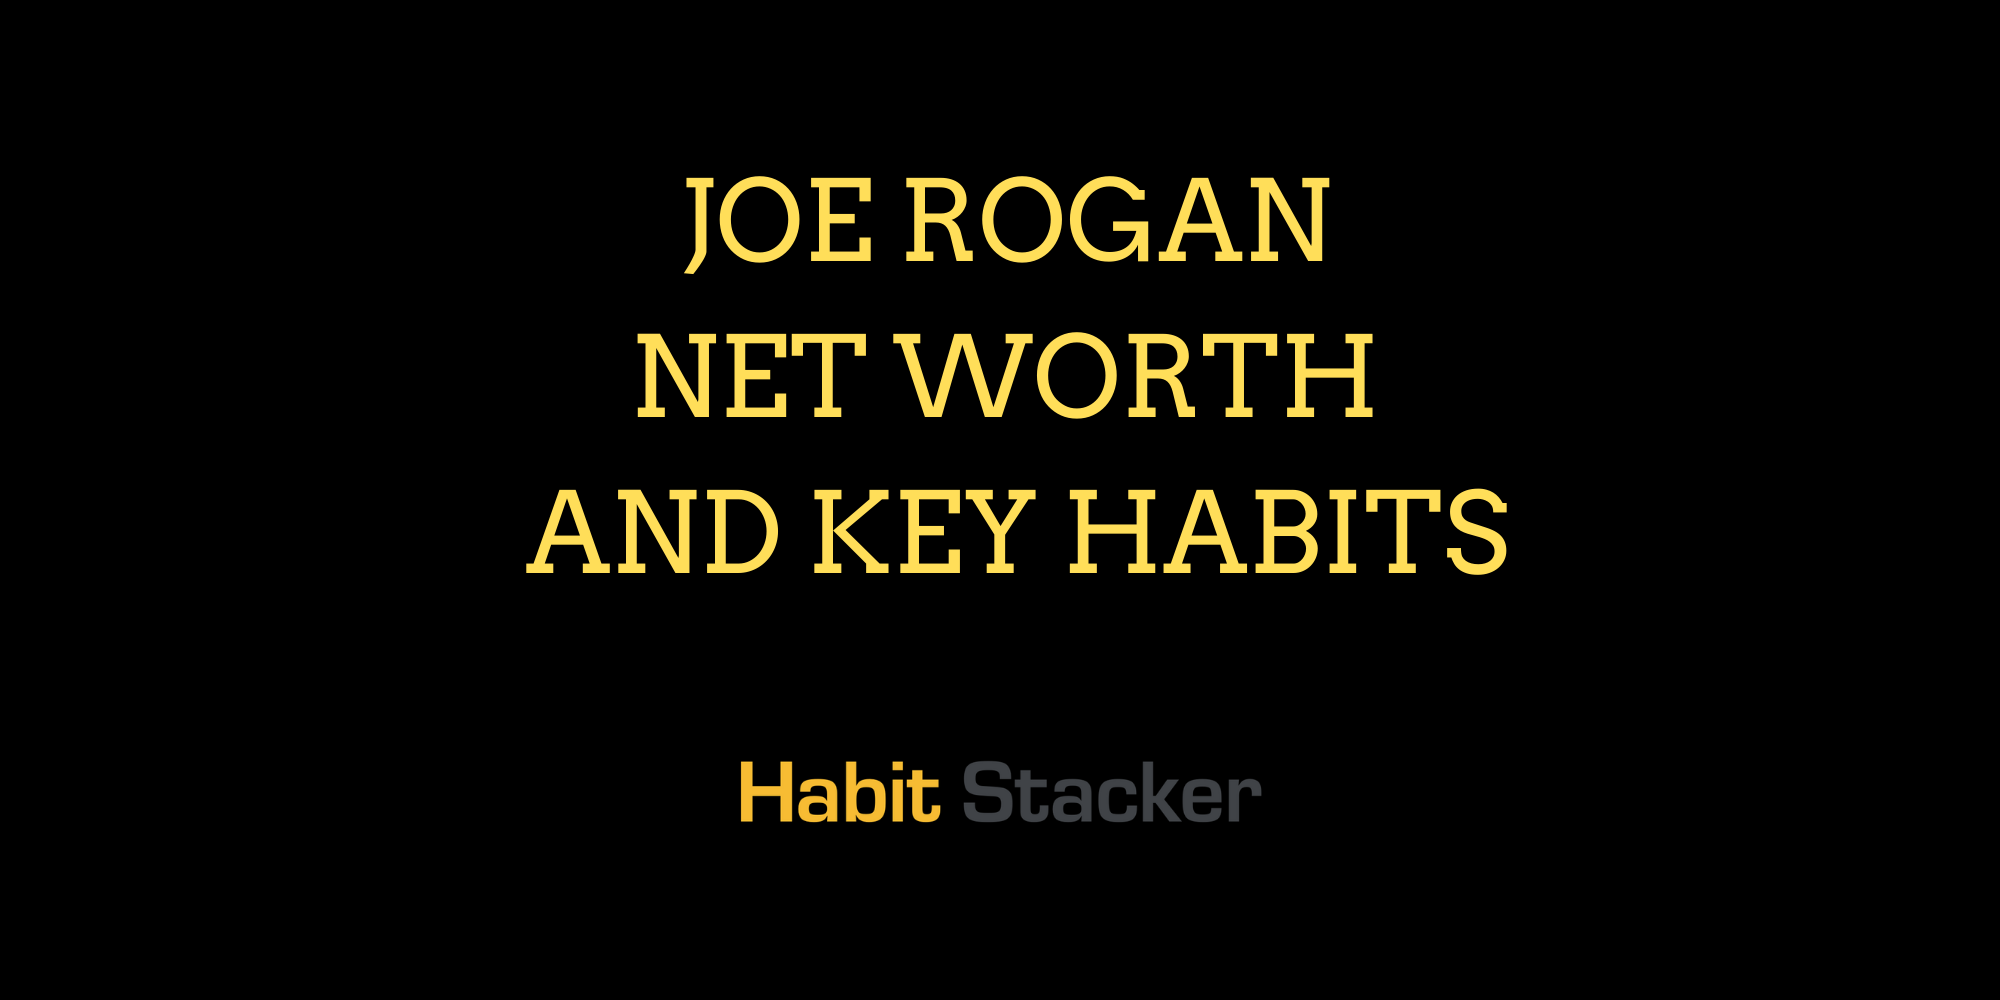 Joe Rogan Net Worth and Key Habits